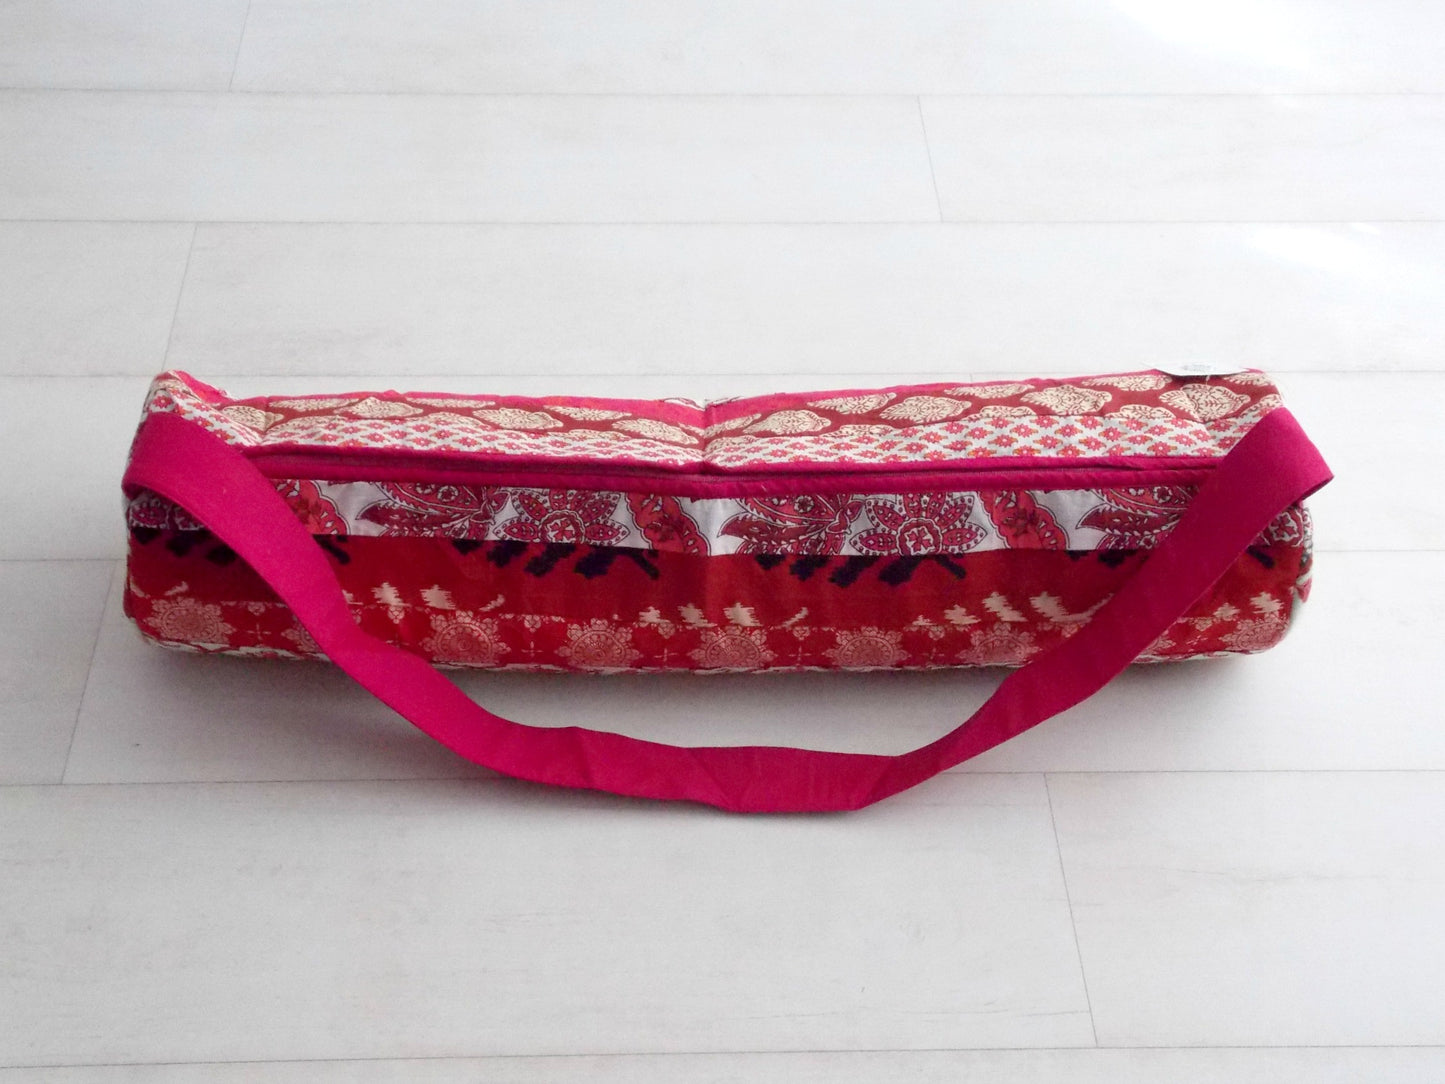 Red Medley Yoga Bag - Patchwork Stripes - An Indian Summer